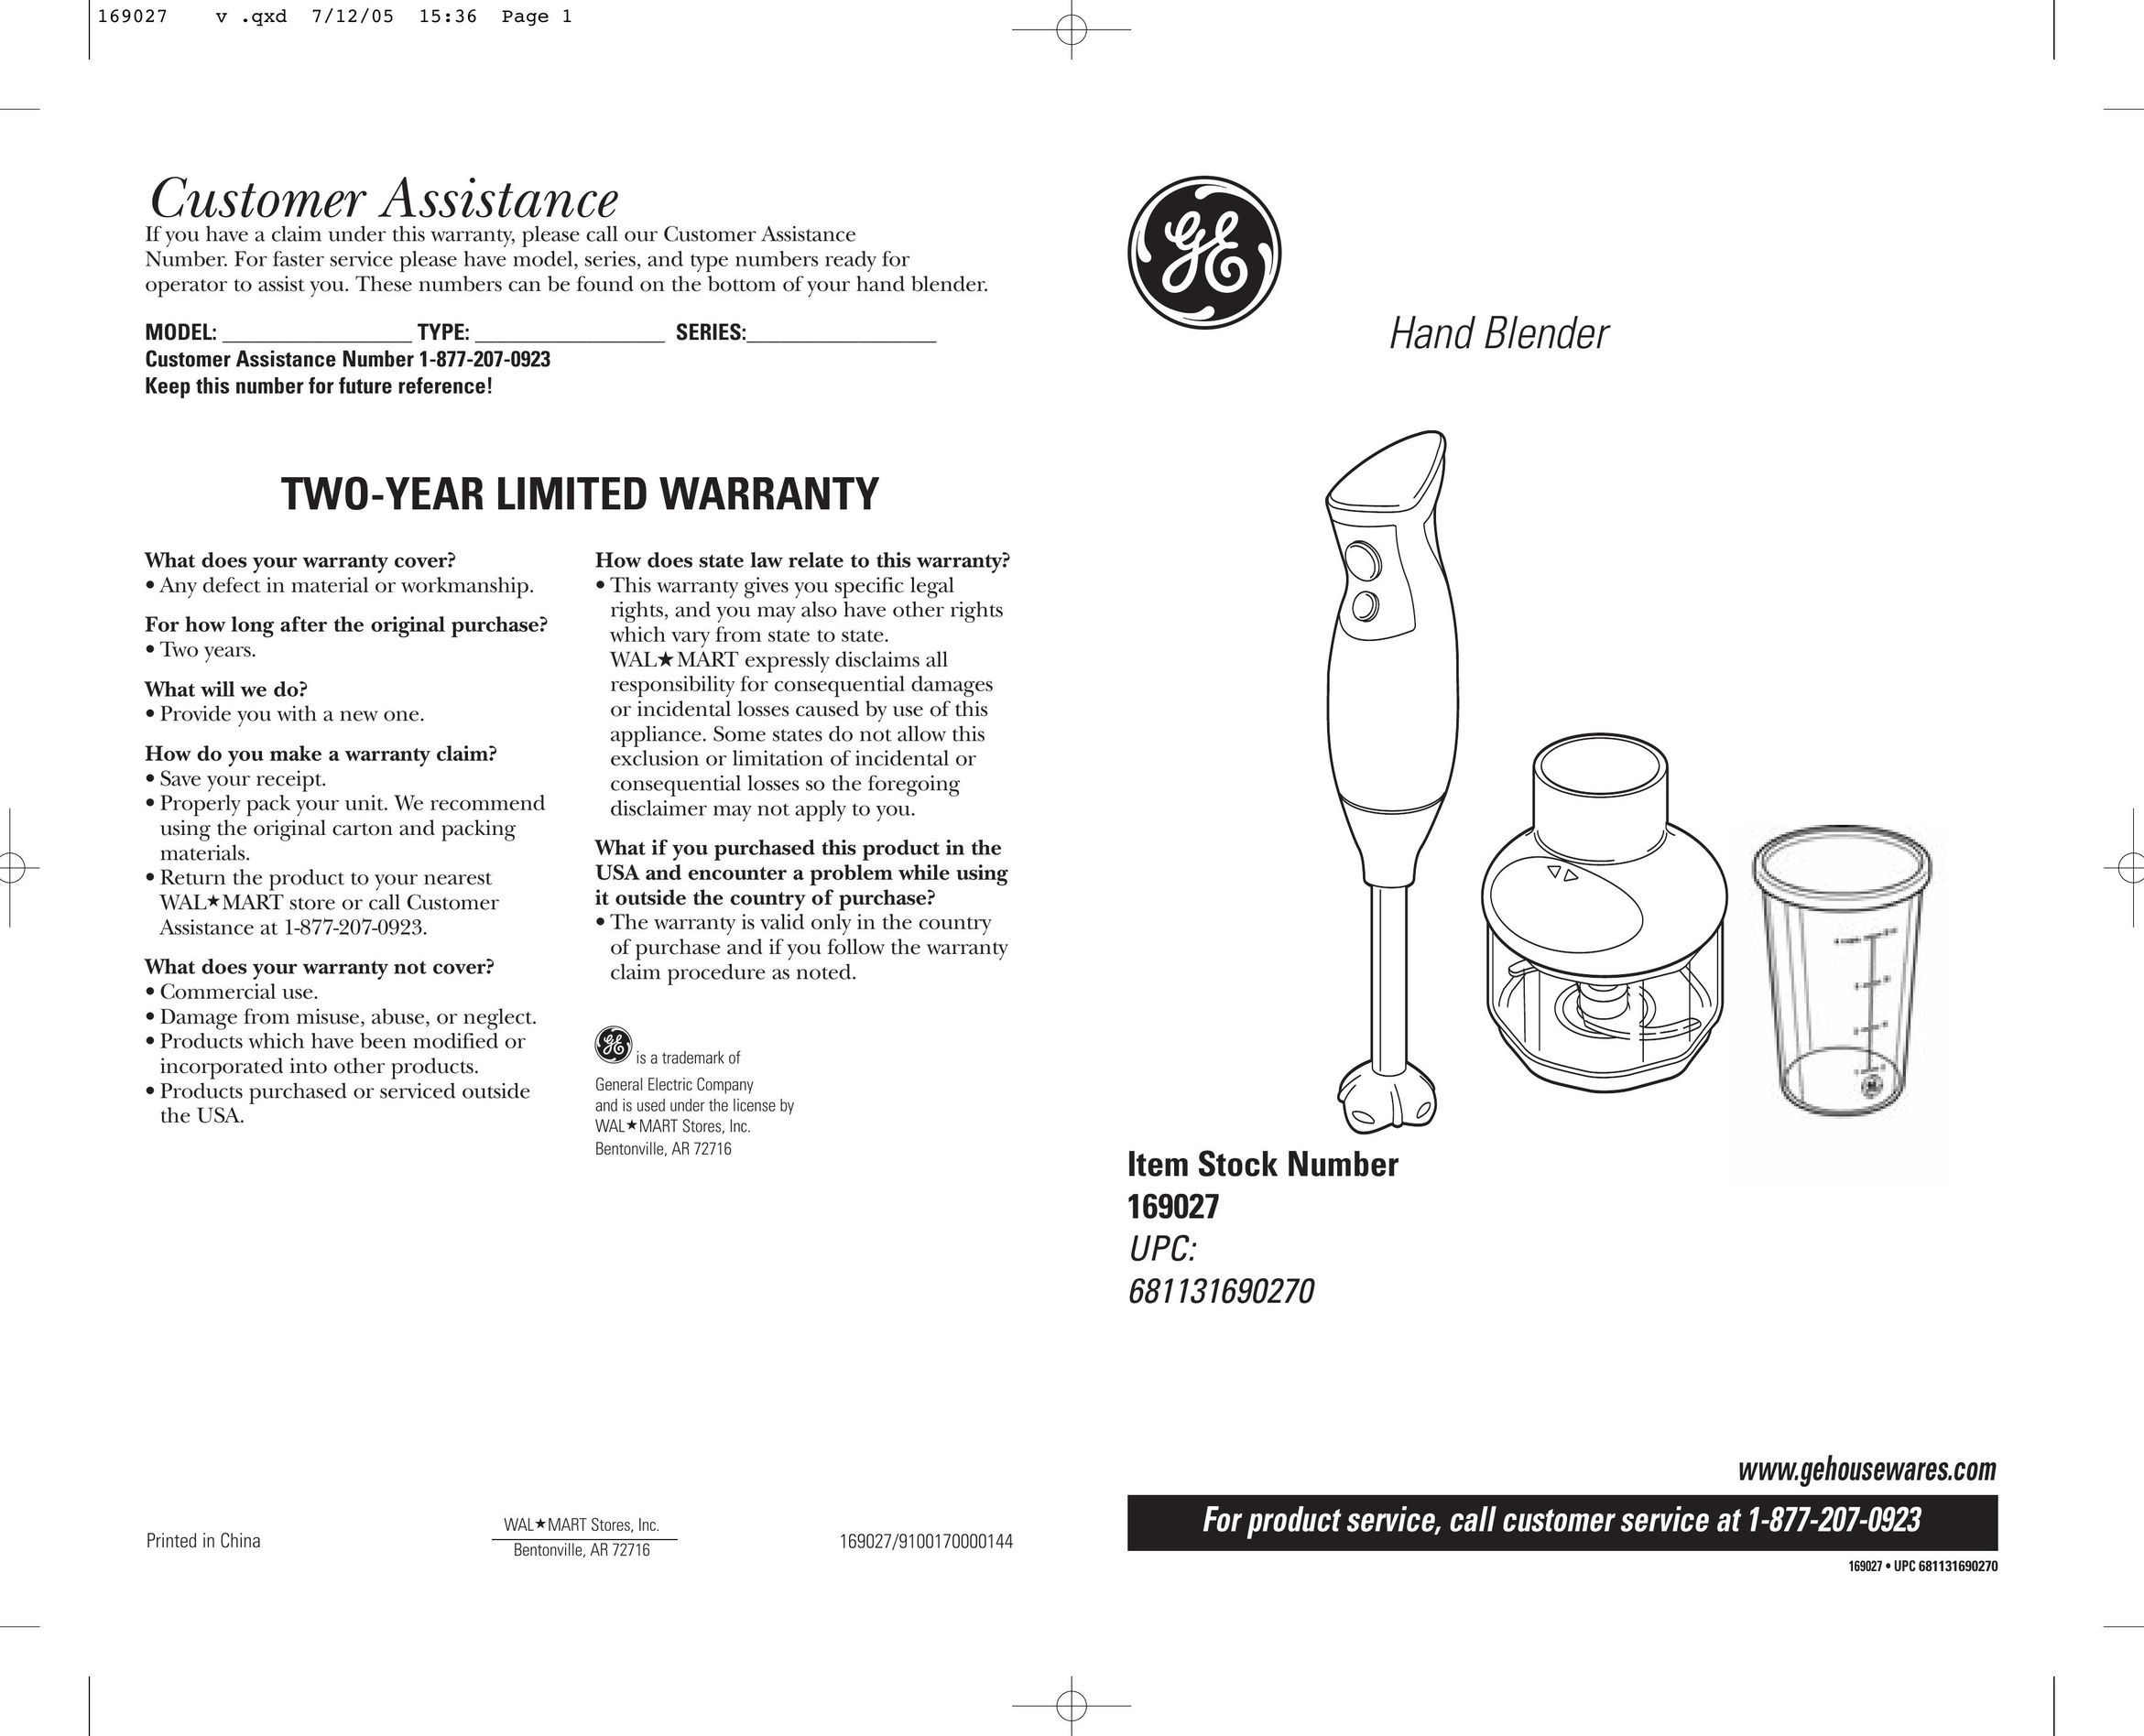 GE 9100170000144 Blender User Manual